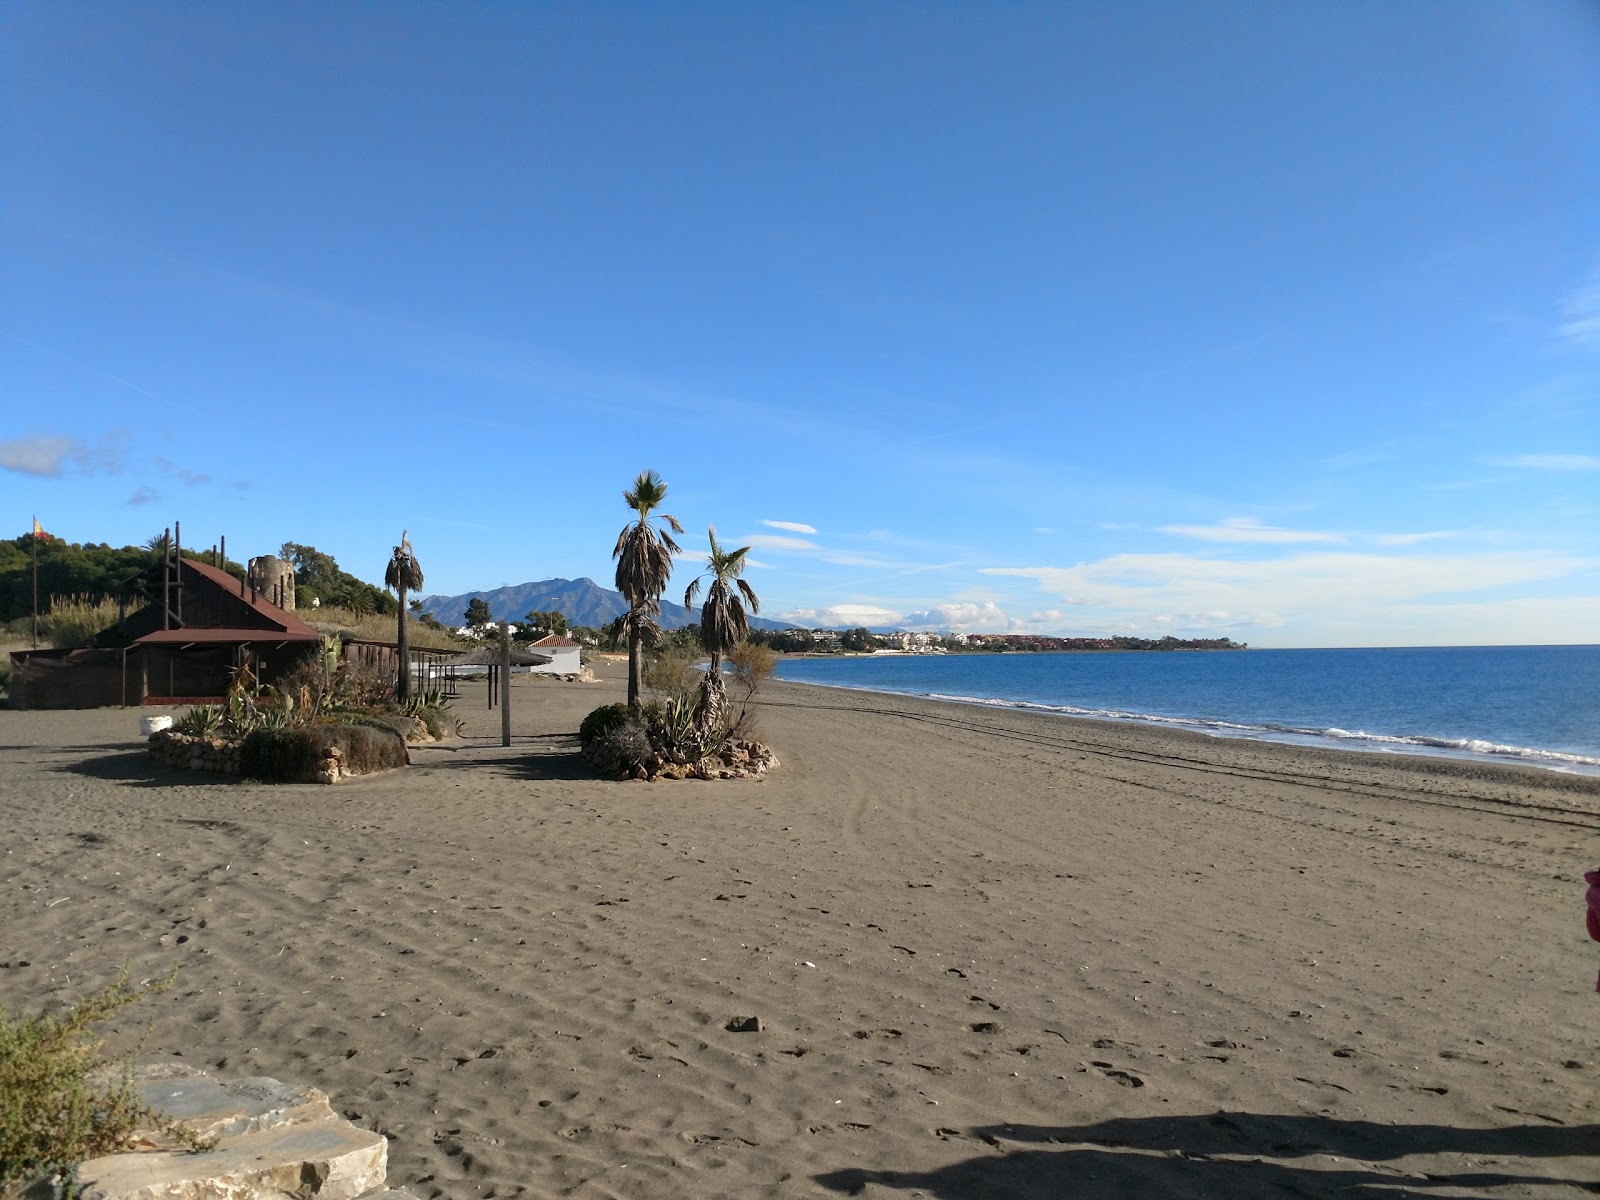 Foto di Playa del Velerin con una superficie del sabbia grigia